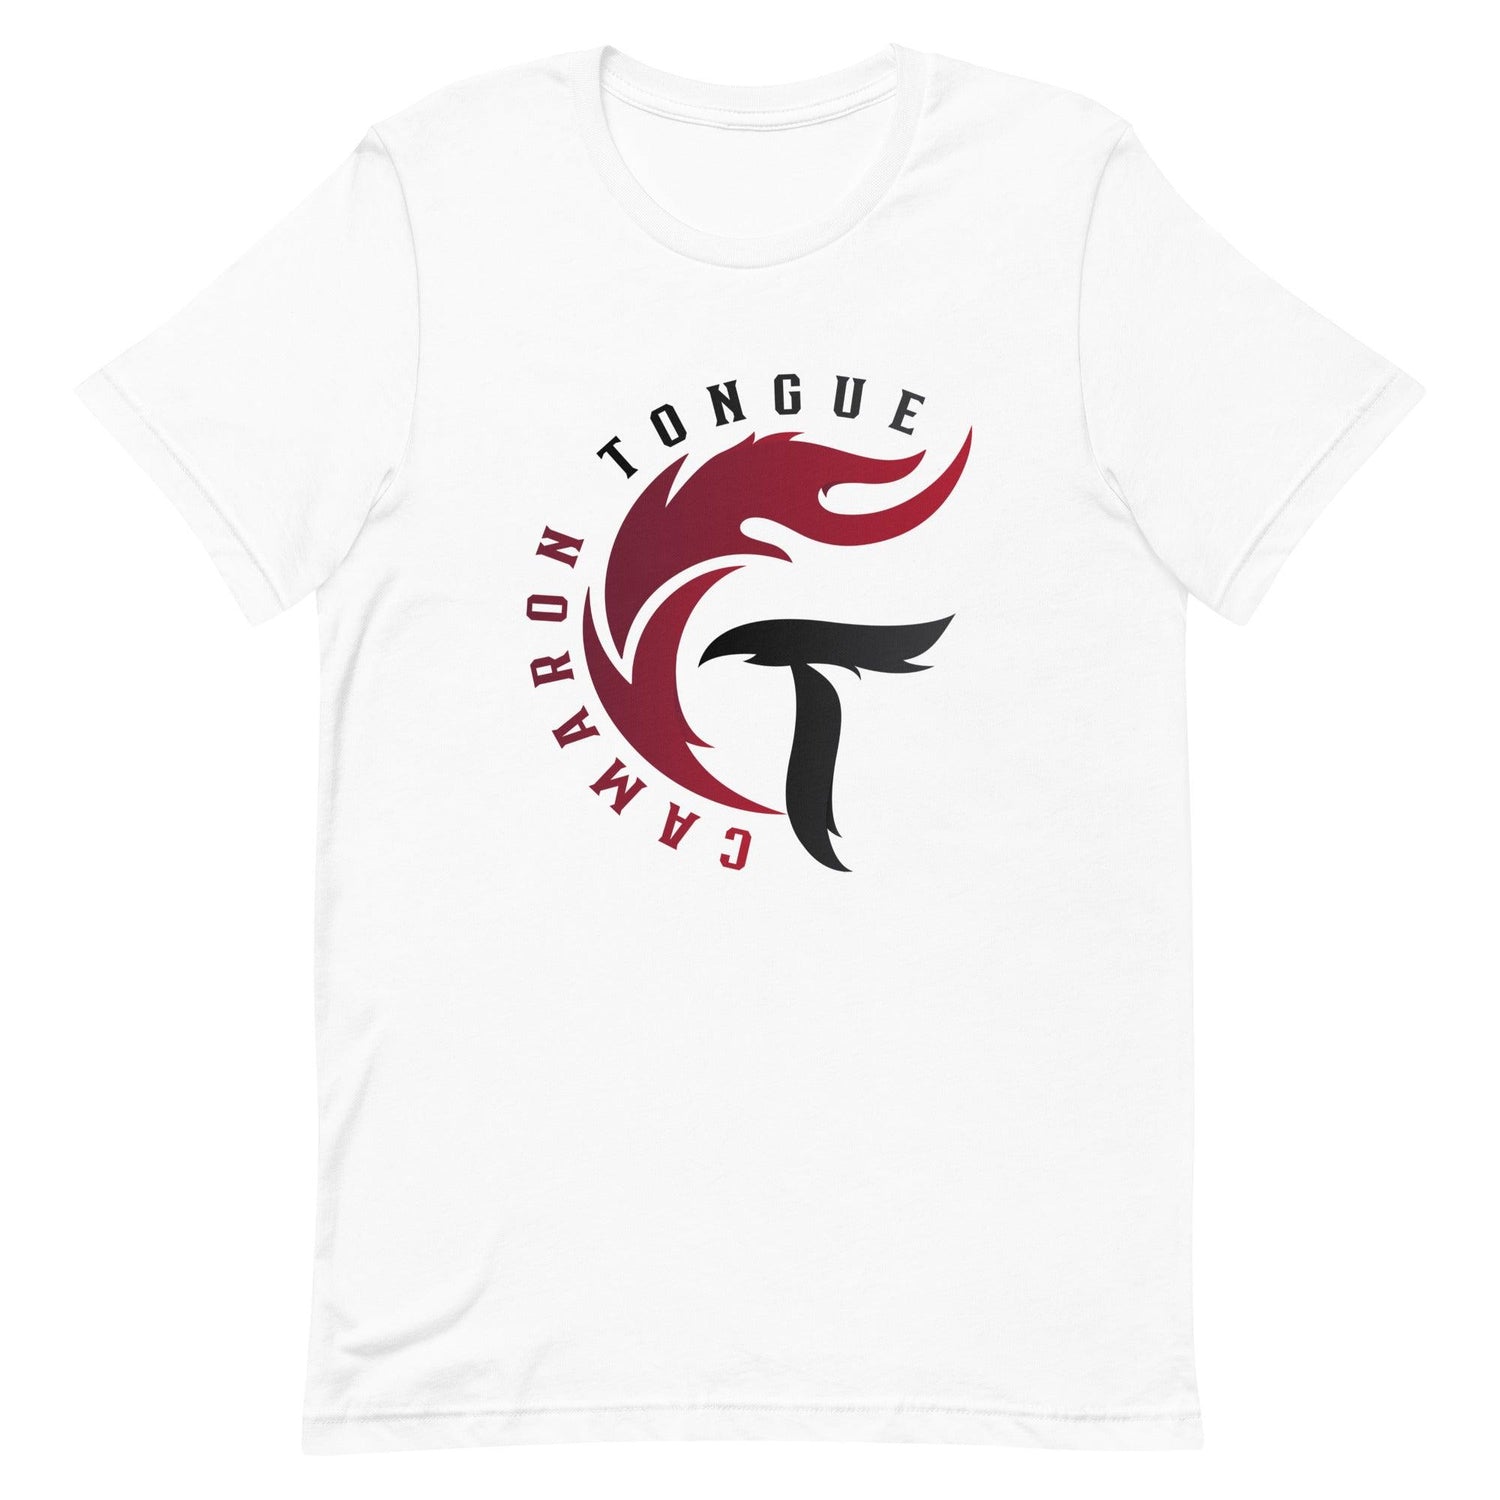 Camaron Tongue "Essential" t-shirt - Fan Arch